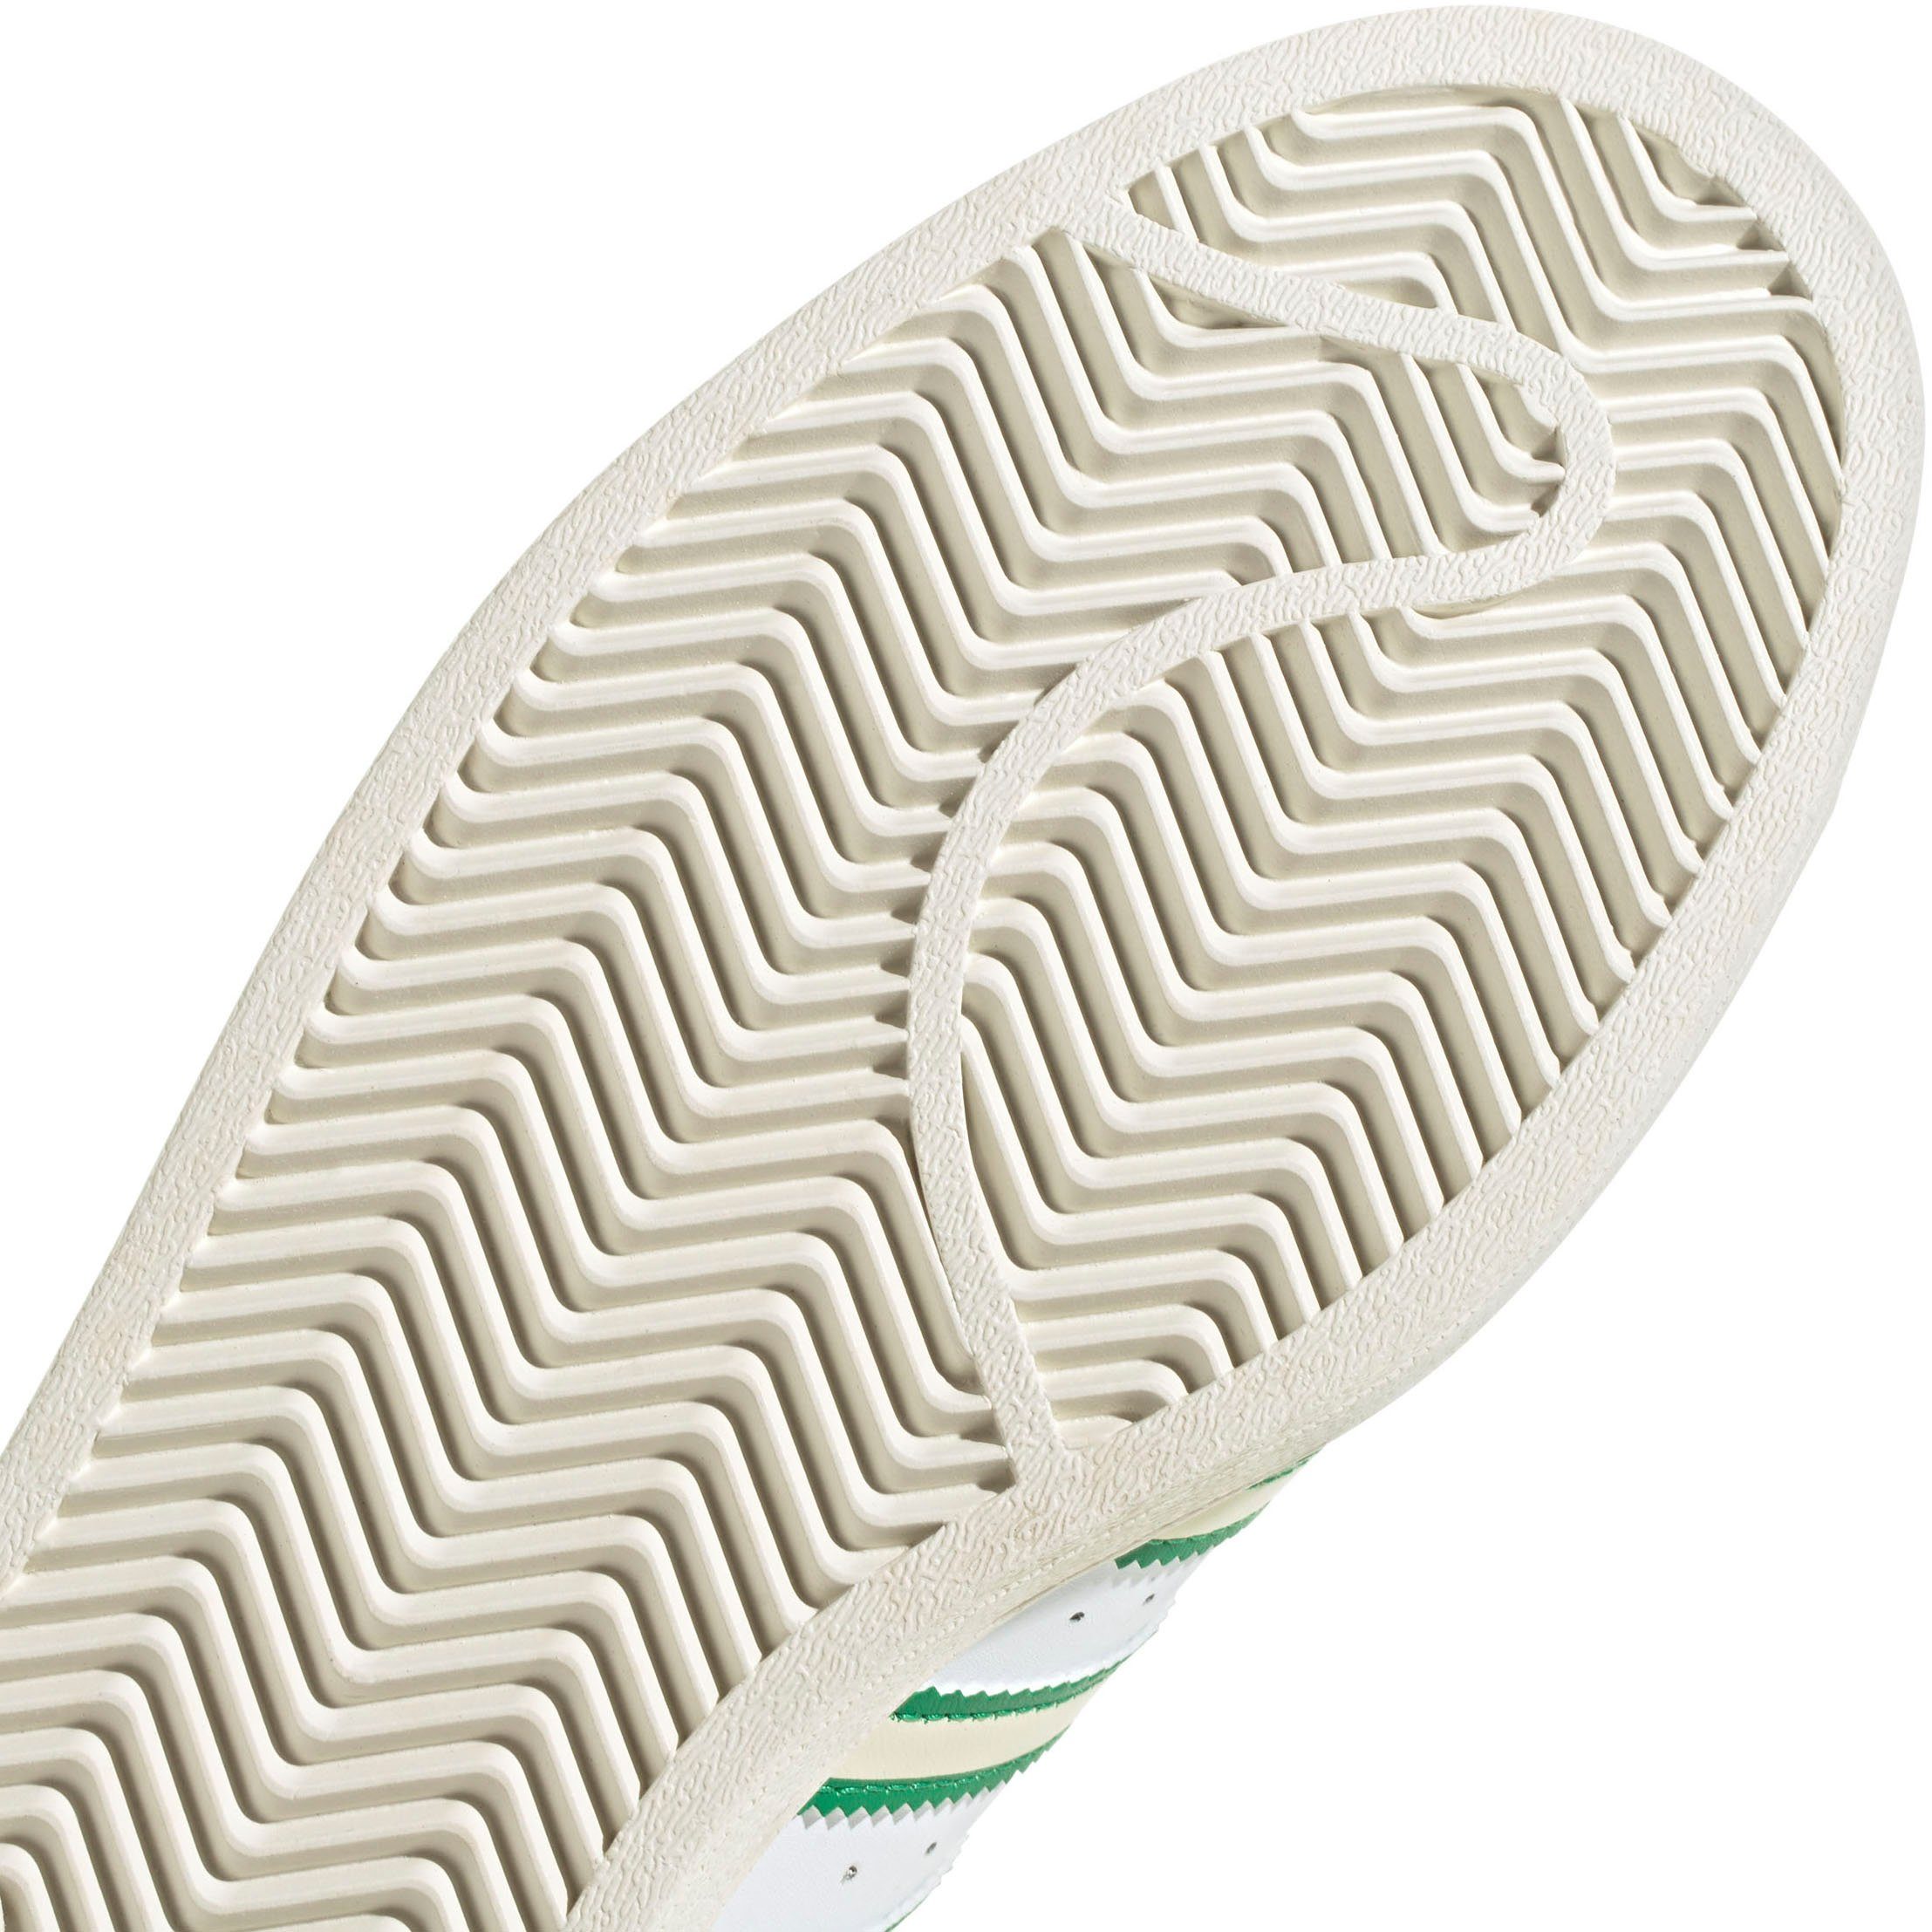 adidas weiß-grün SUPERSTAR Originals Sneaker